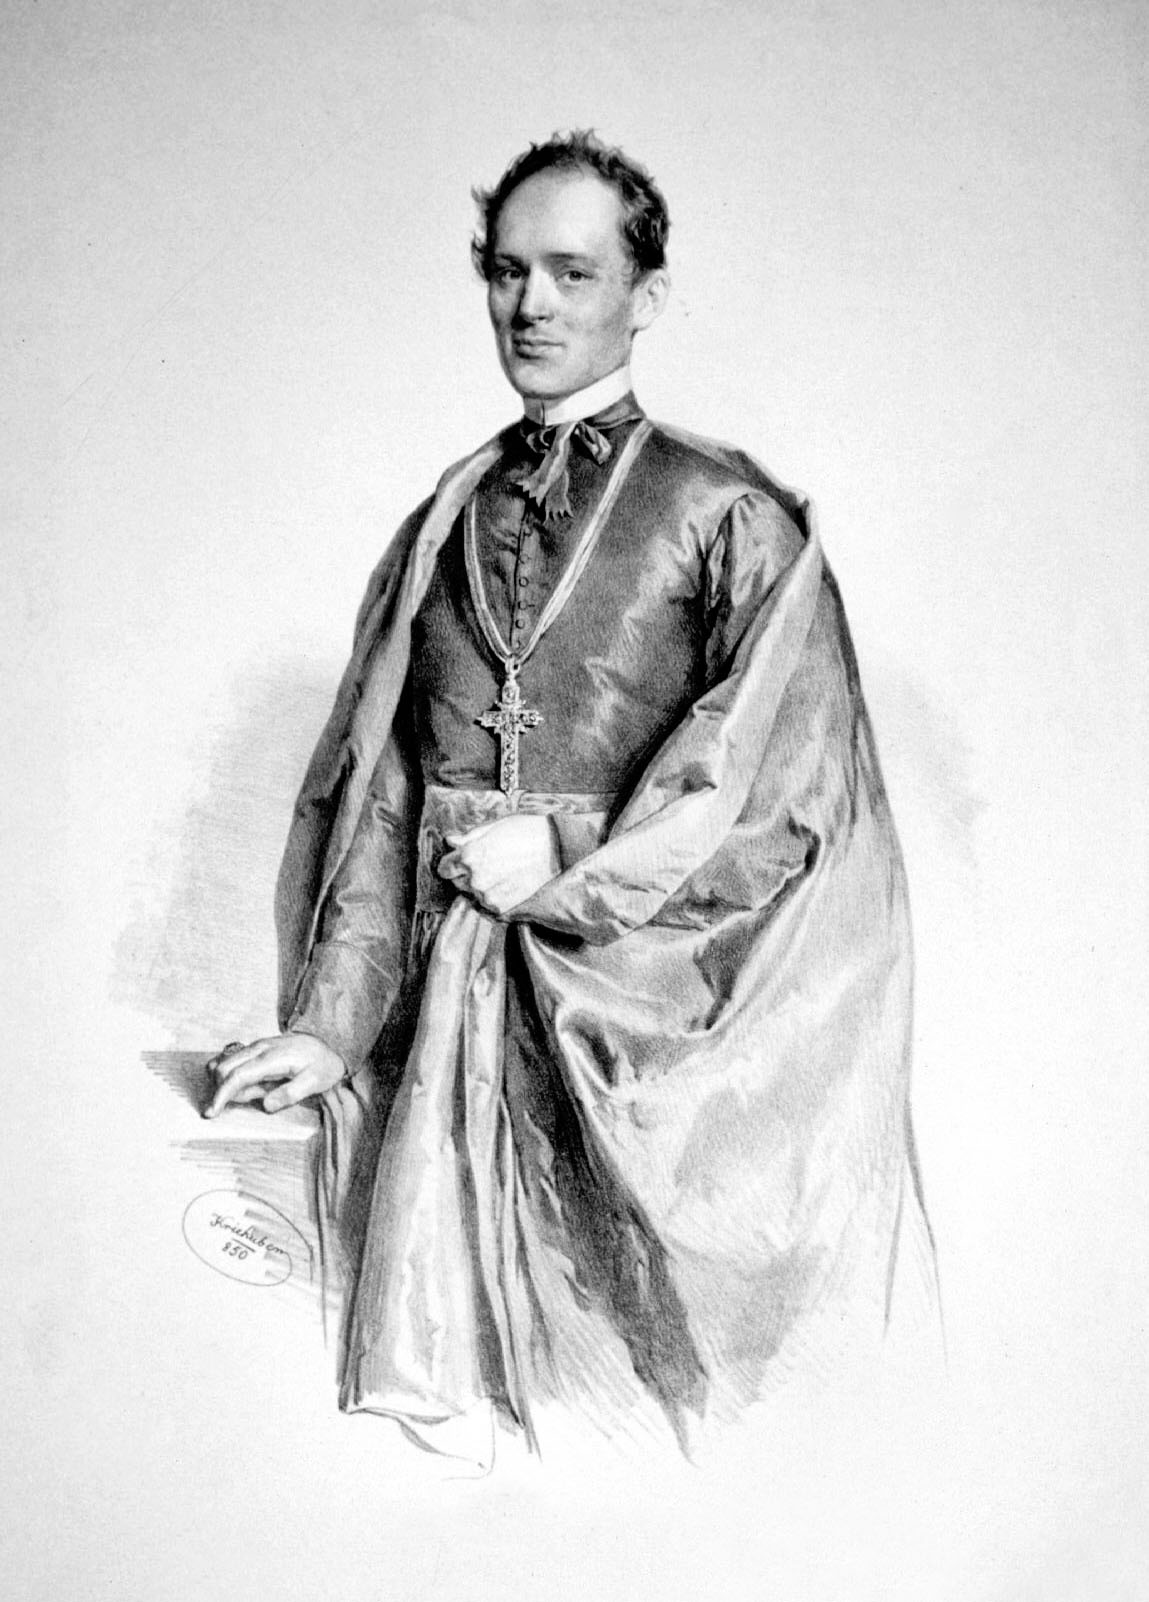 J. J. Strossmayer 1850